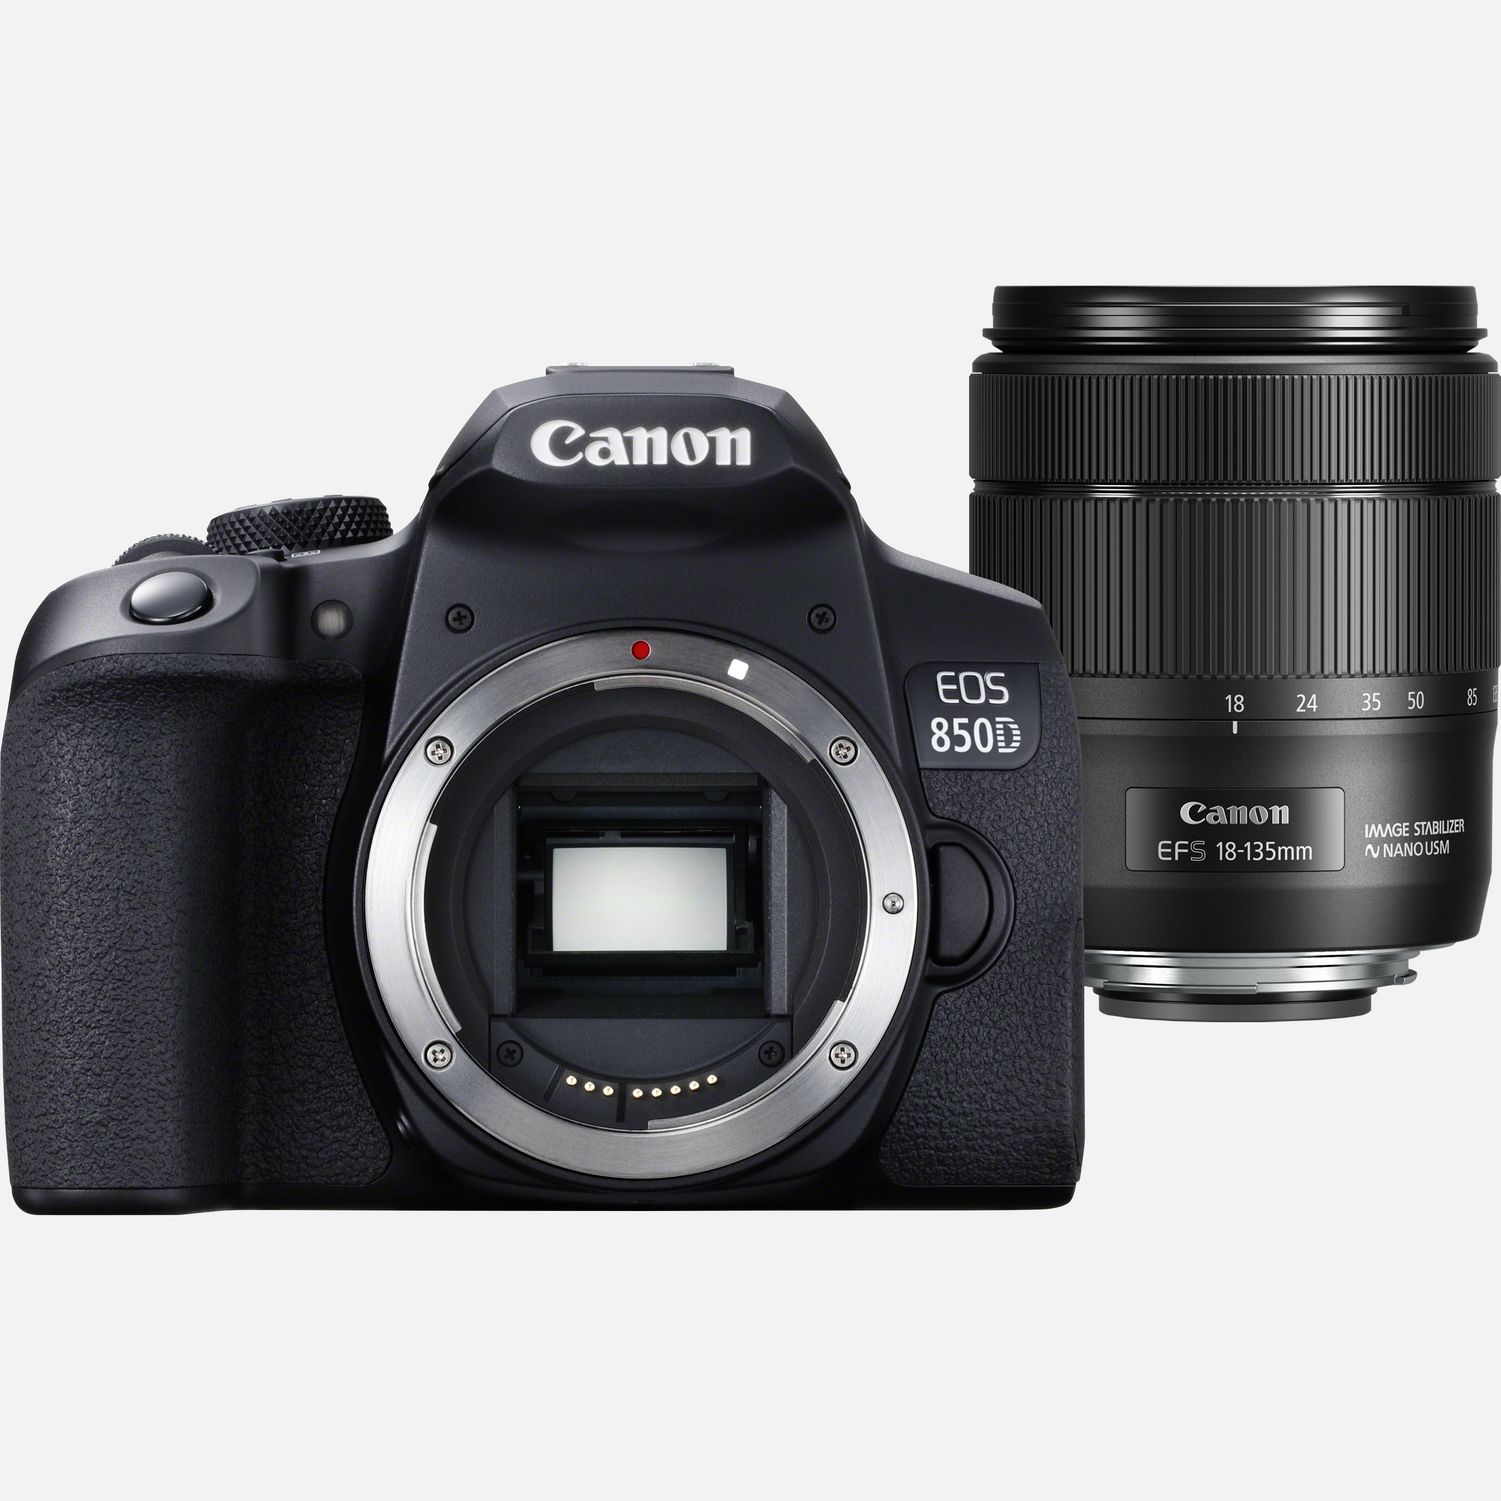 Image of Fotocamera Canon EOS 850D + Obiettivo EF-S 18-135mm f/3.5-5.6 IS USM